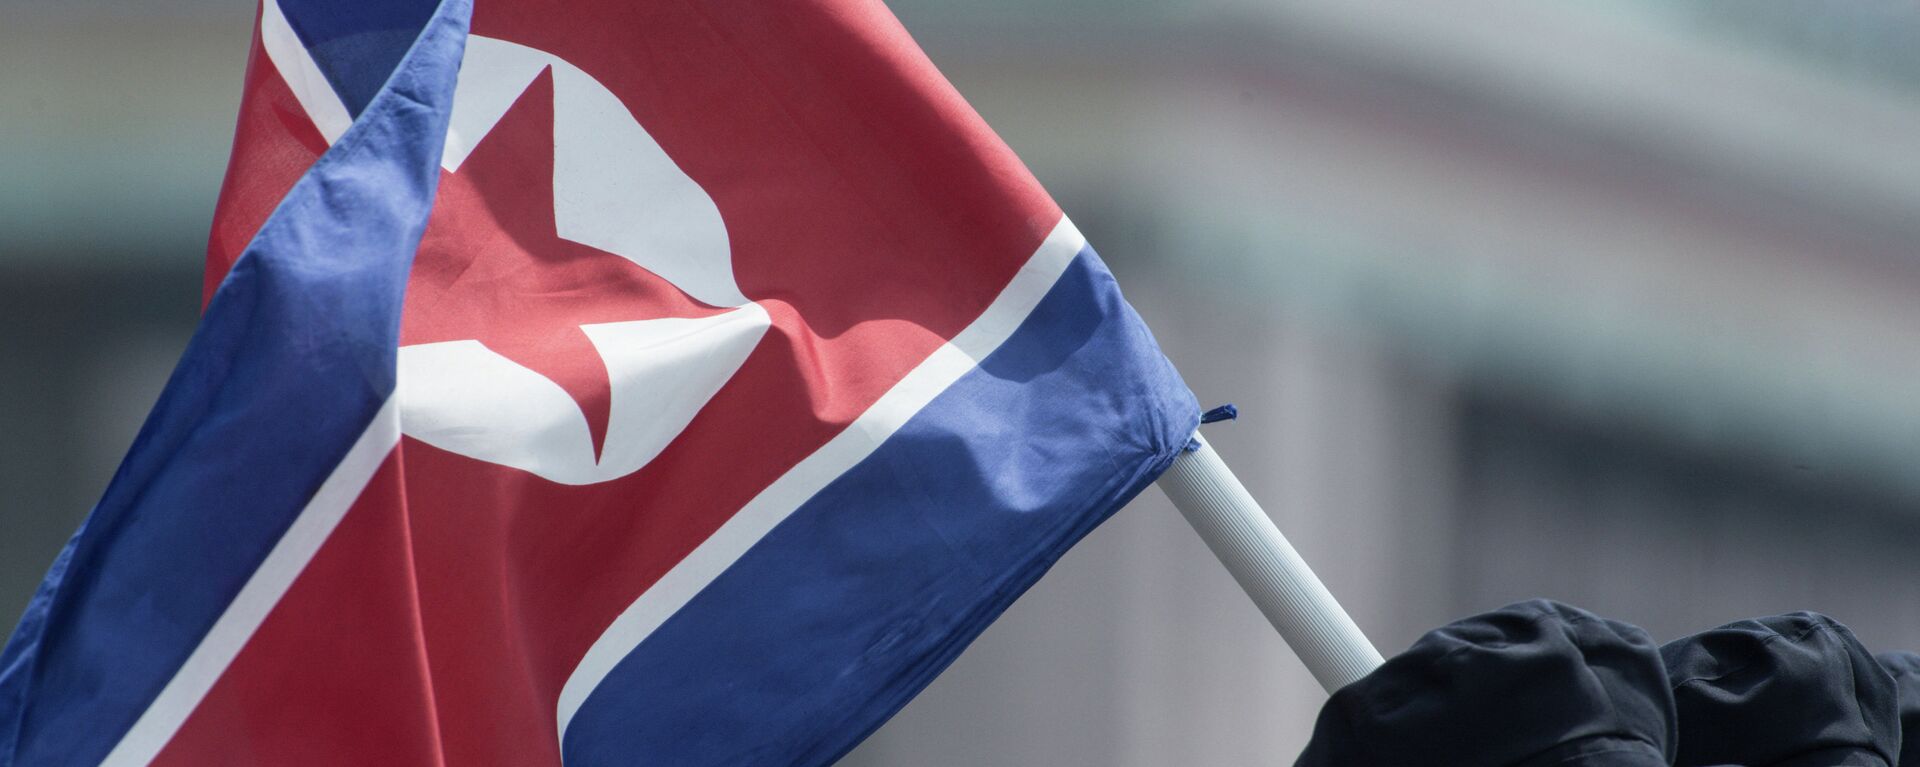 Bandera de Corea del Norte - Sputnik Mundo, 1920, 03.05.2021